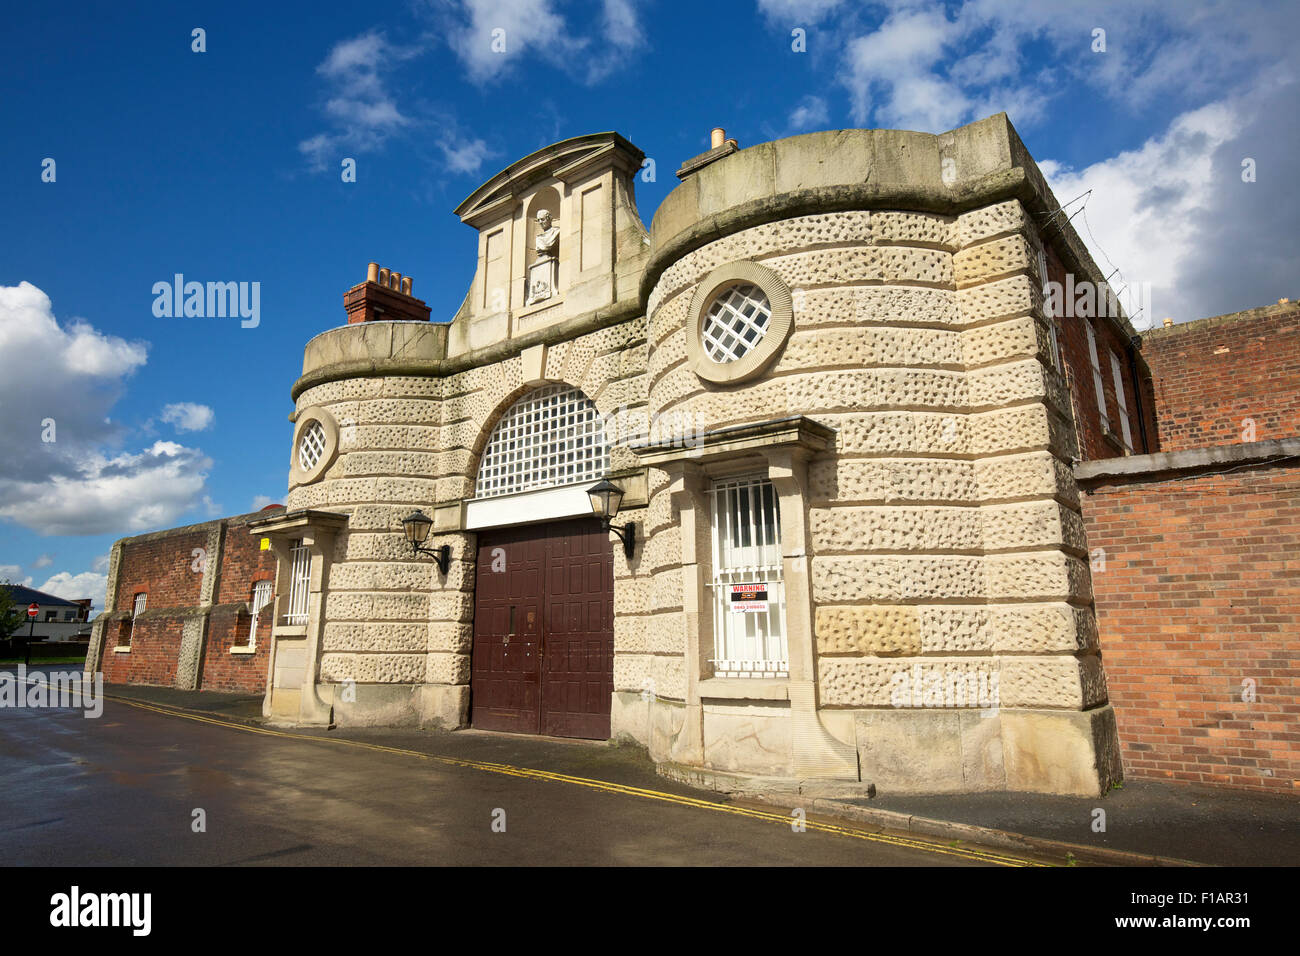 La prison de Shrewsbury Shrewsbury, Shropshire West Midlands England UK Banque D'Images